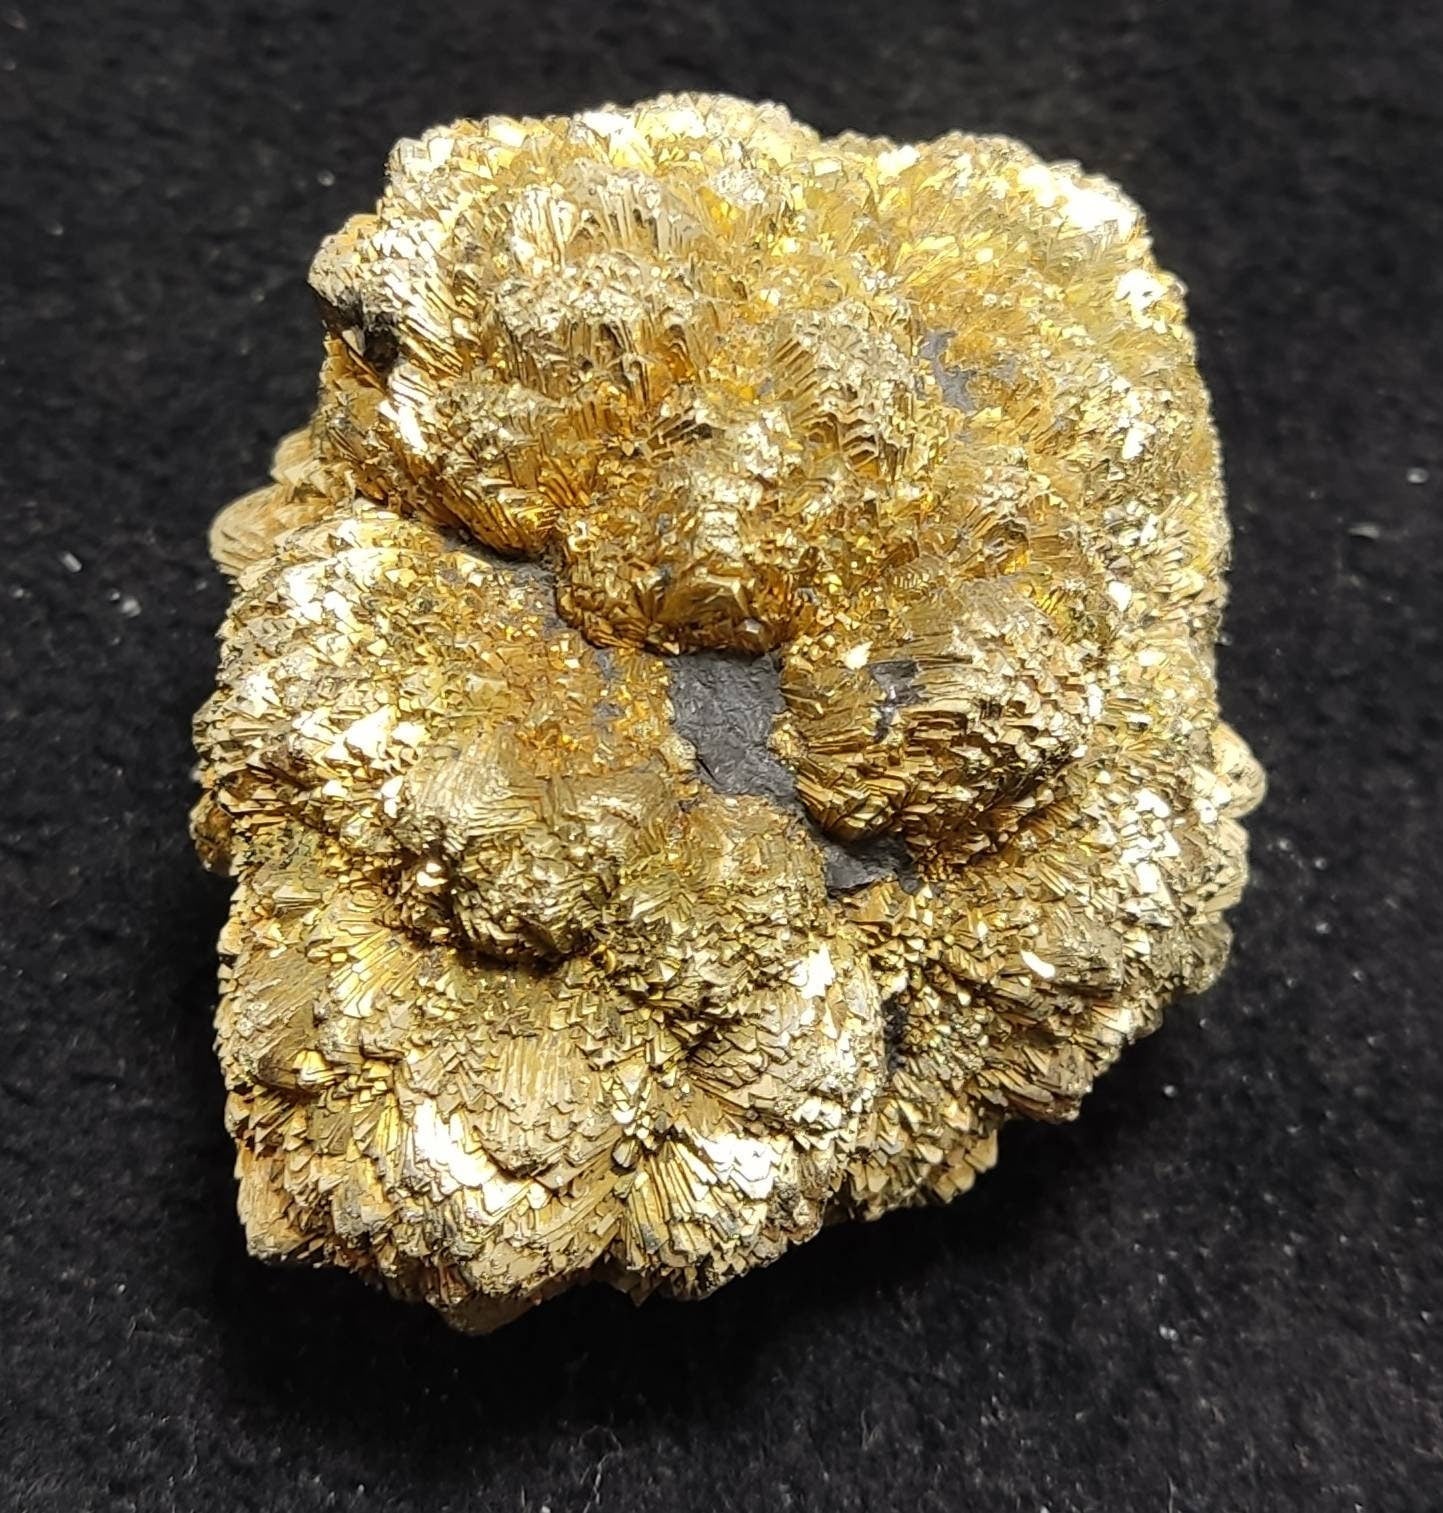 Pyrite/marcasite on co'al 430 grams